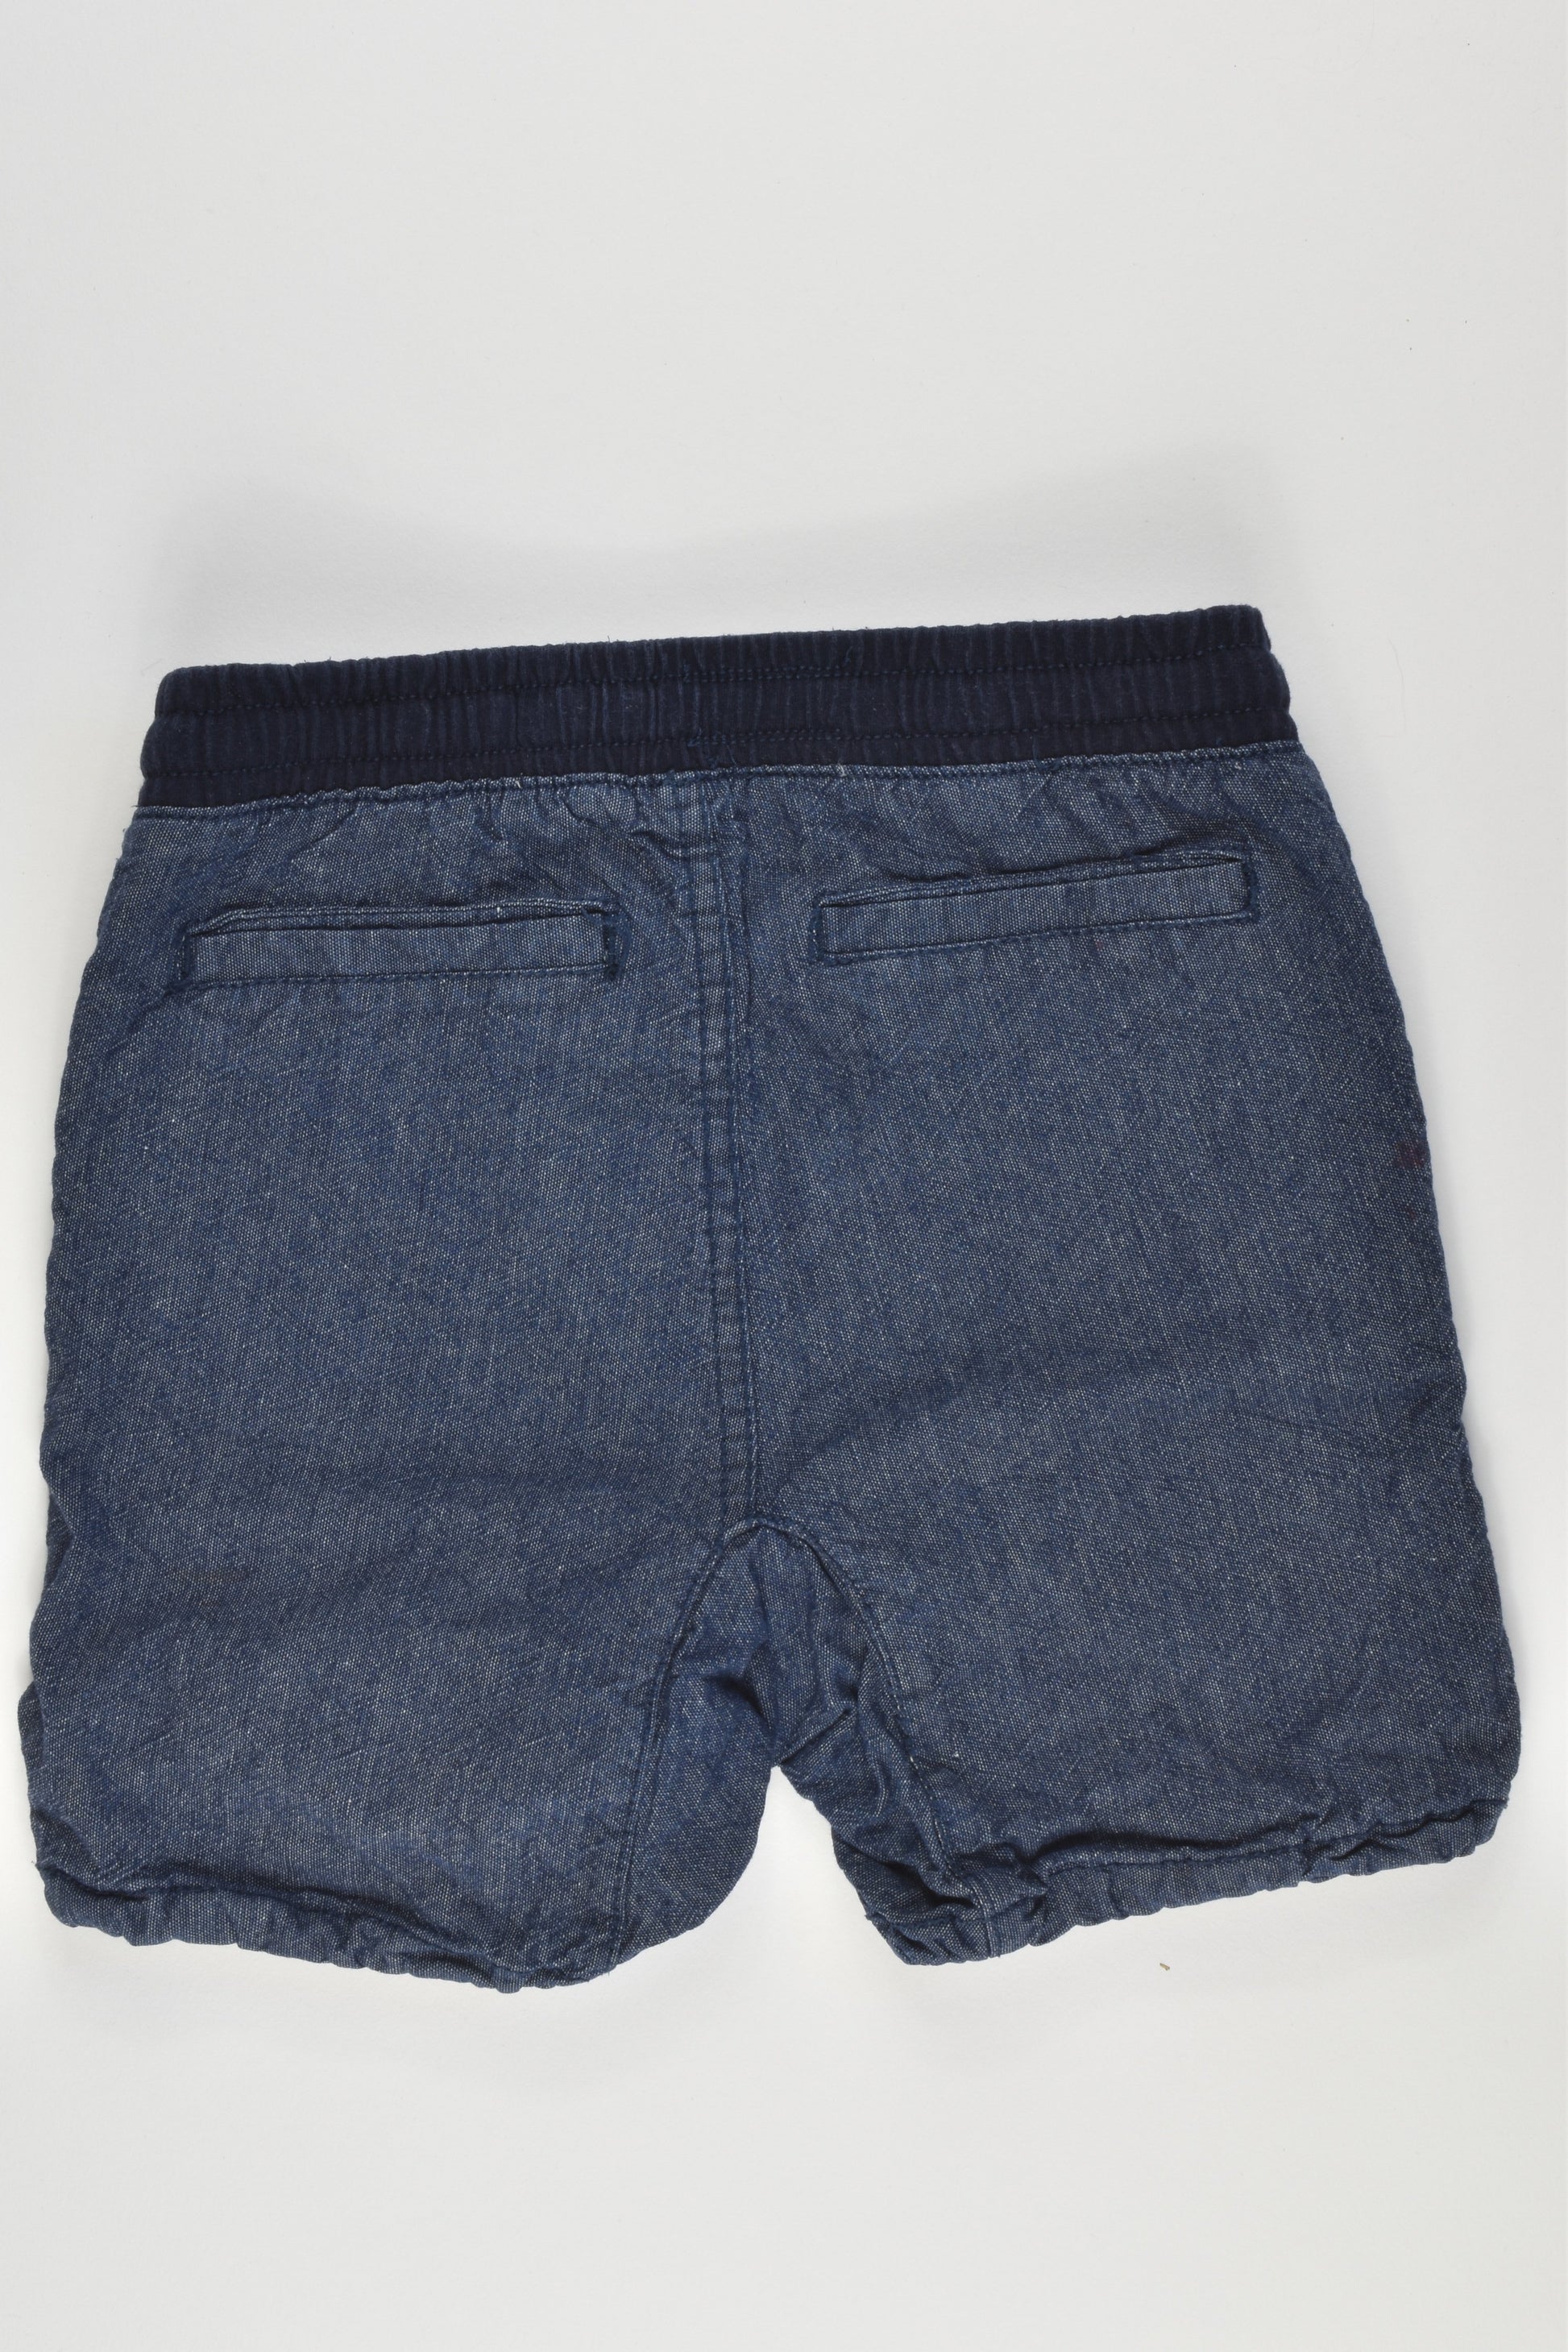 Cotton On Kids Size 3 Soft Denim Shorts